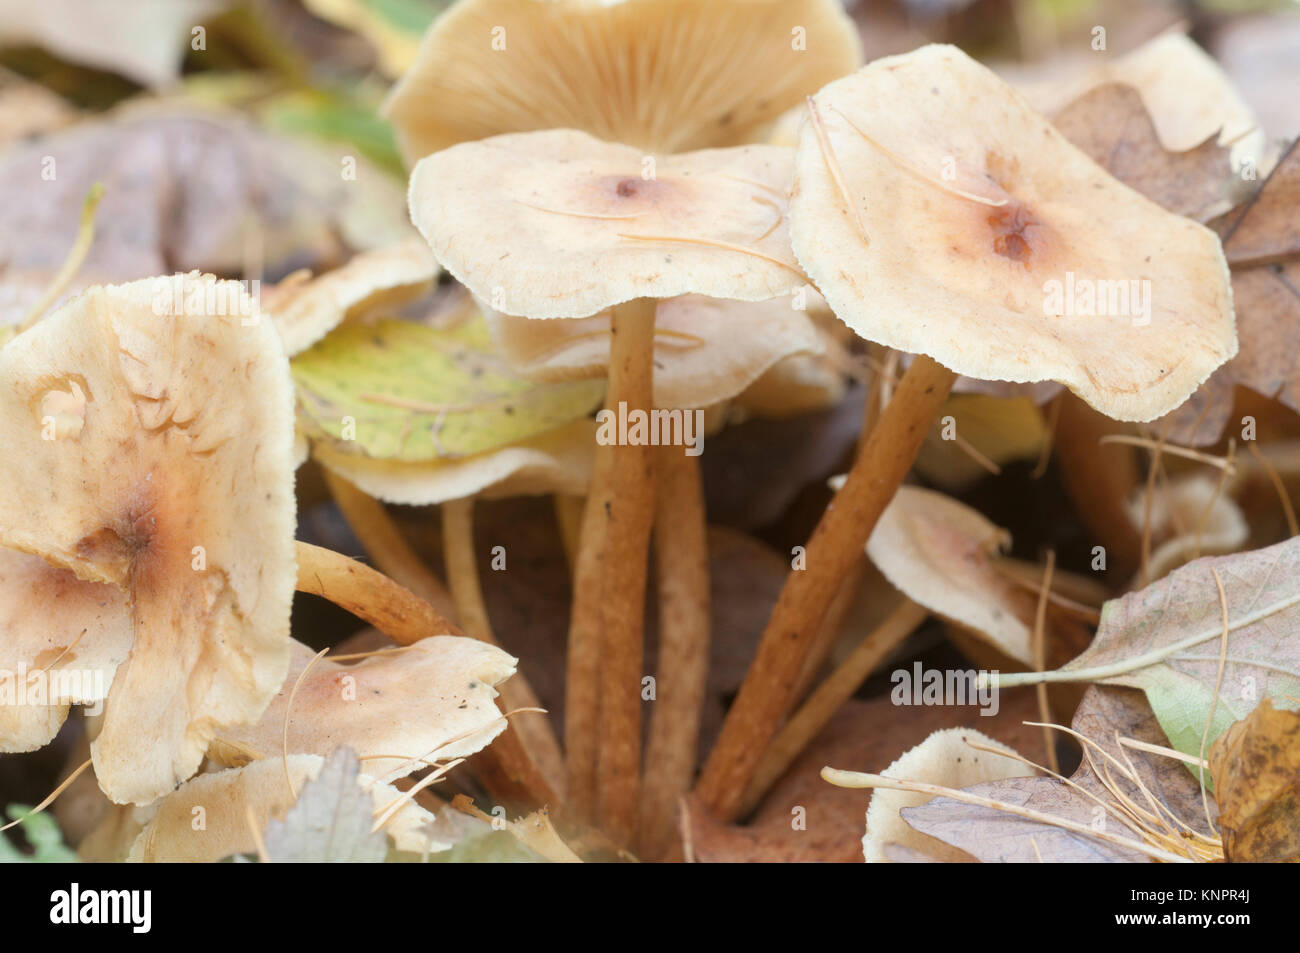 Pholiota lubrica mushrooms on a soil with autumn leaves Stock Photo